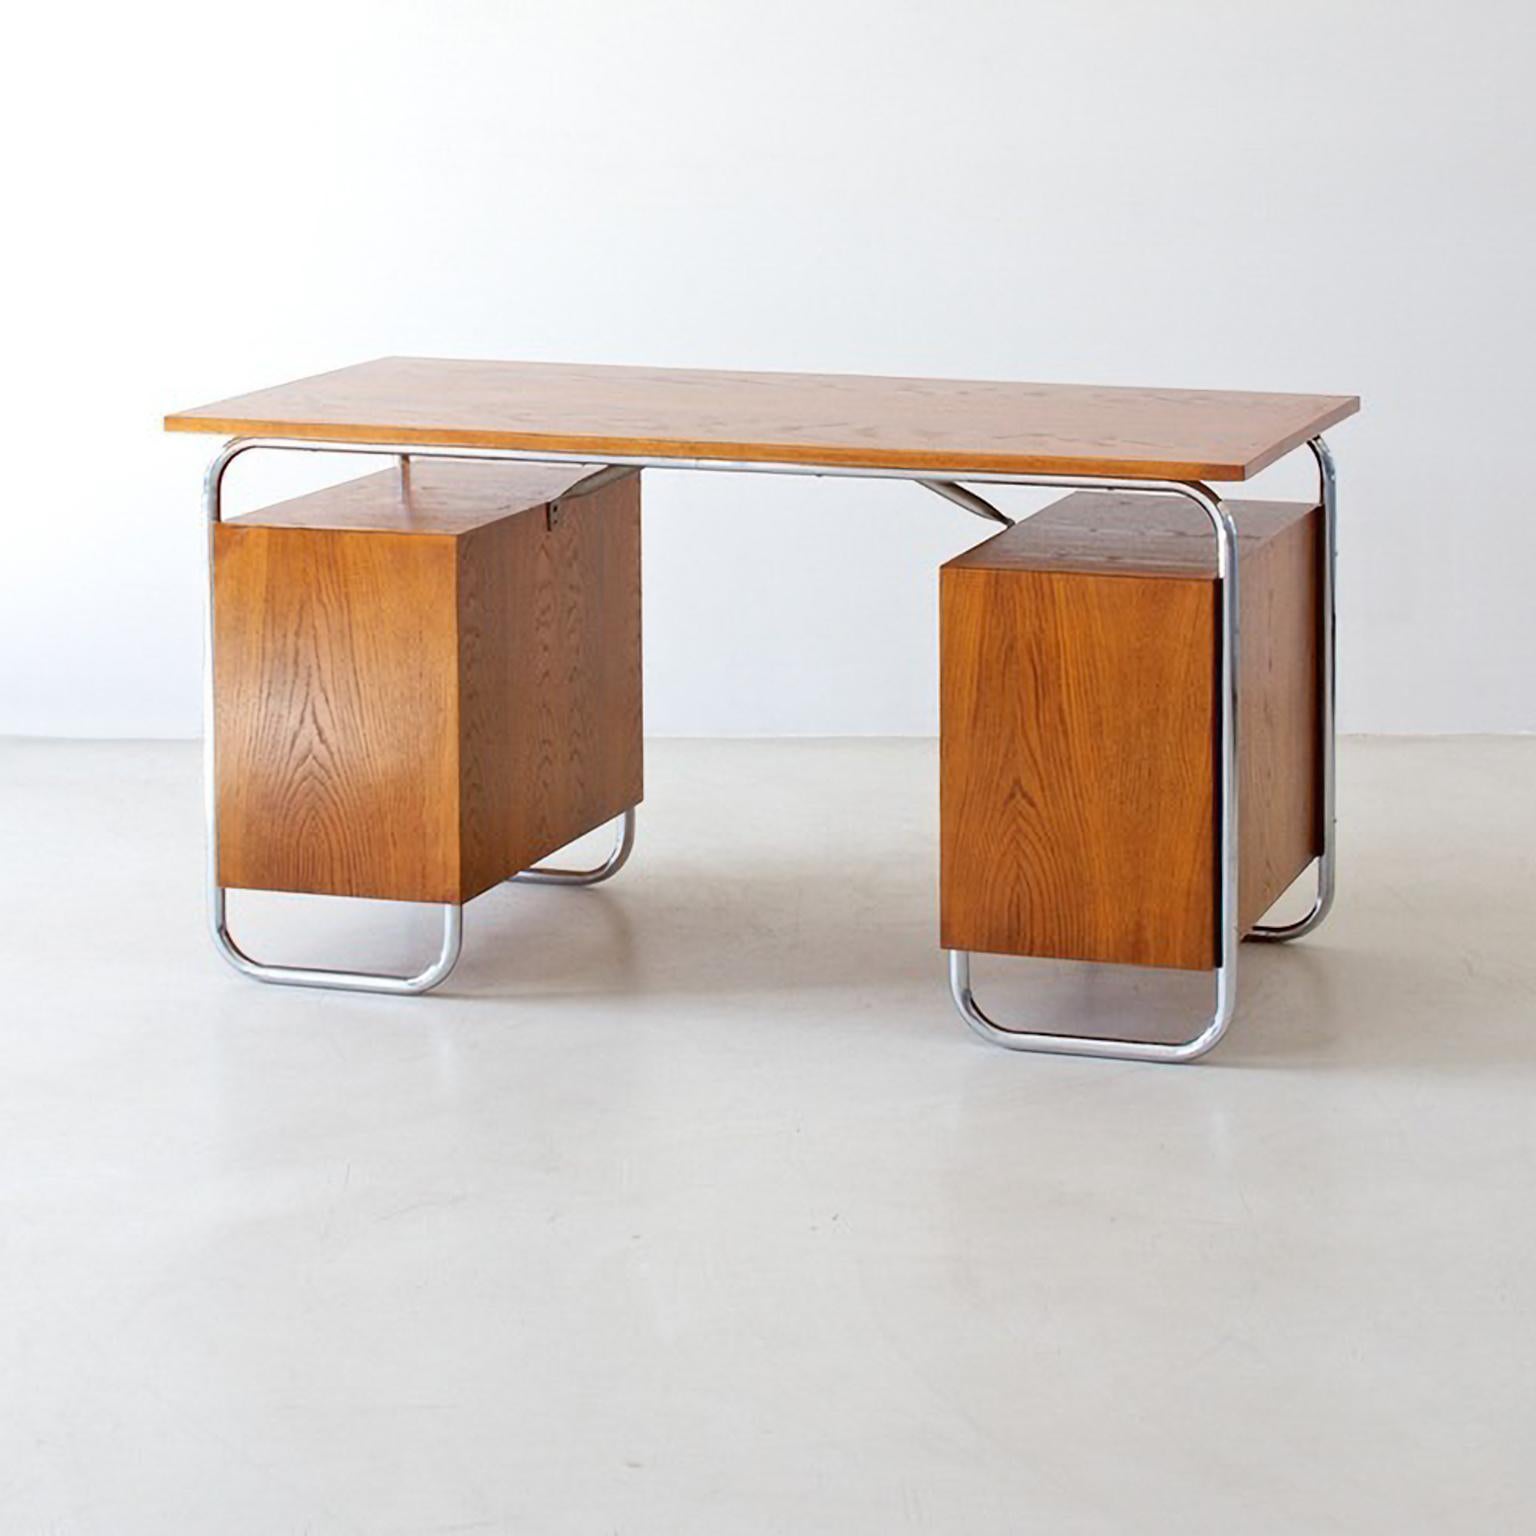 Mid-20th Century Modernist Tubular Steel Desk with 2 Chests of Drawers, Chromed Metal, Oak Veneer For Sale